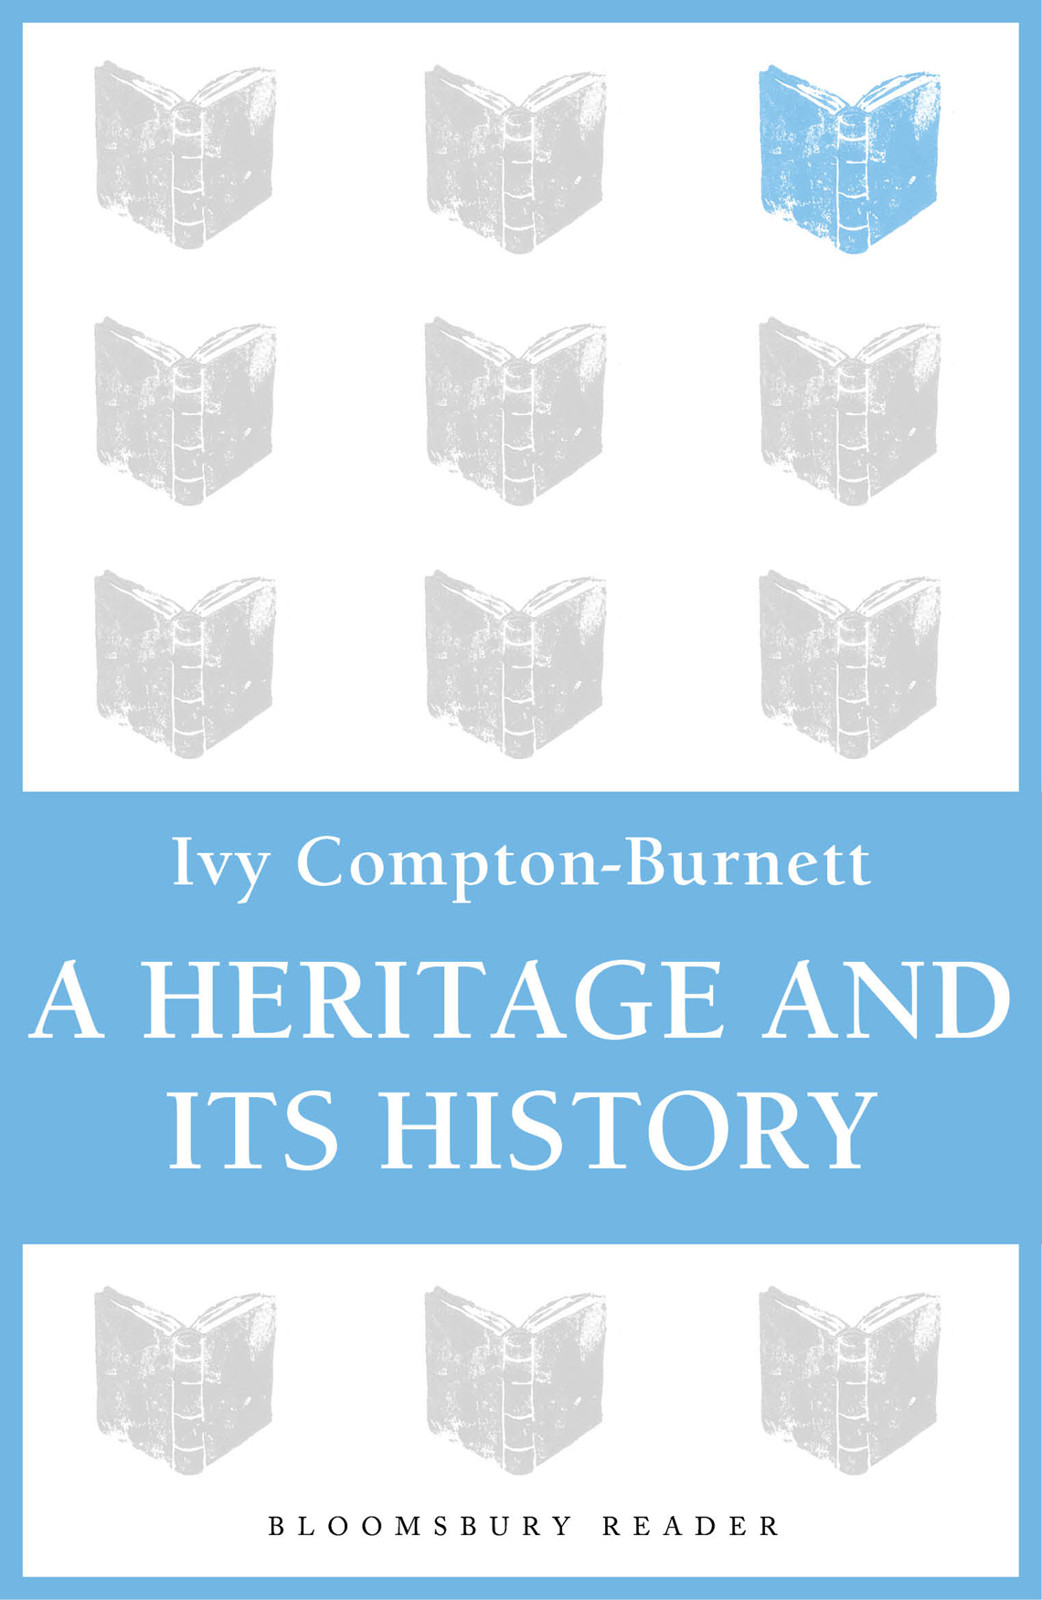 Compton-Burnett Ivy - A Heritage and its History скачать бесплатно